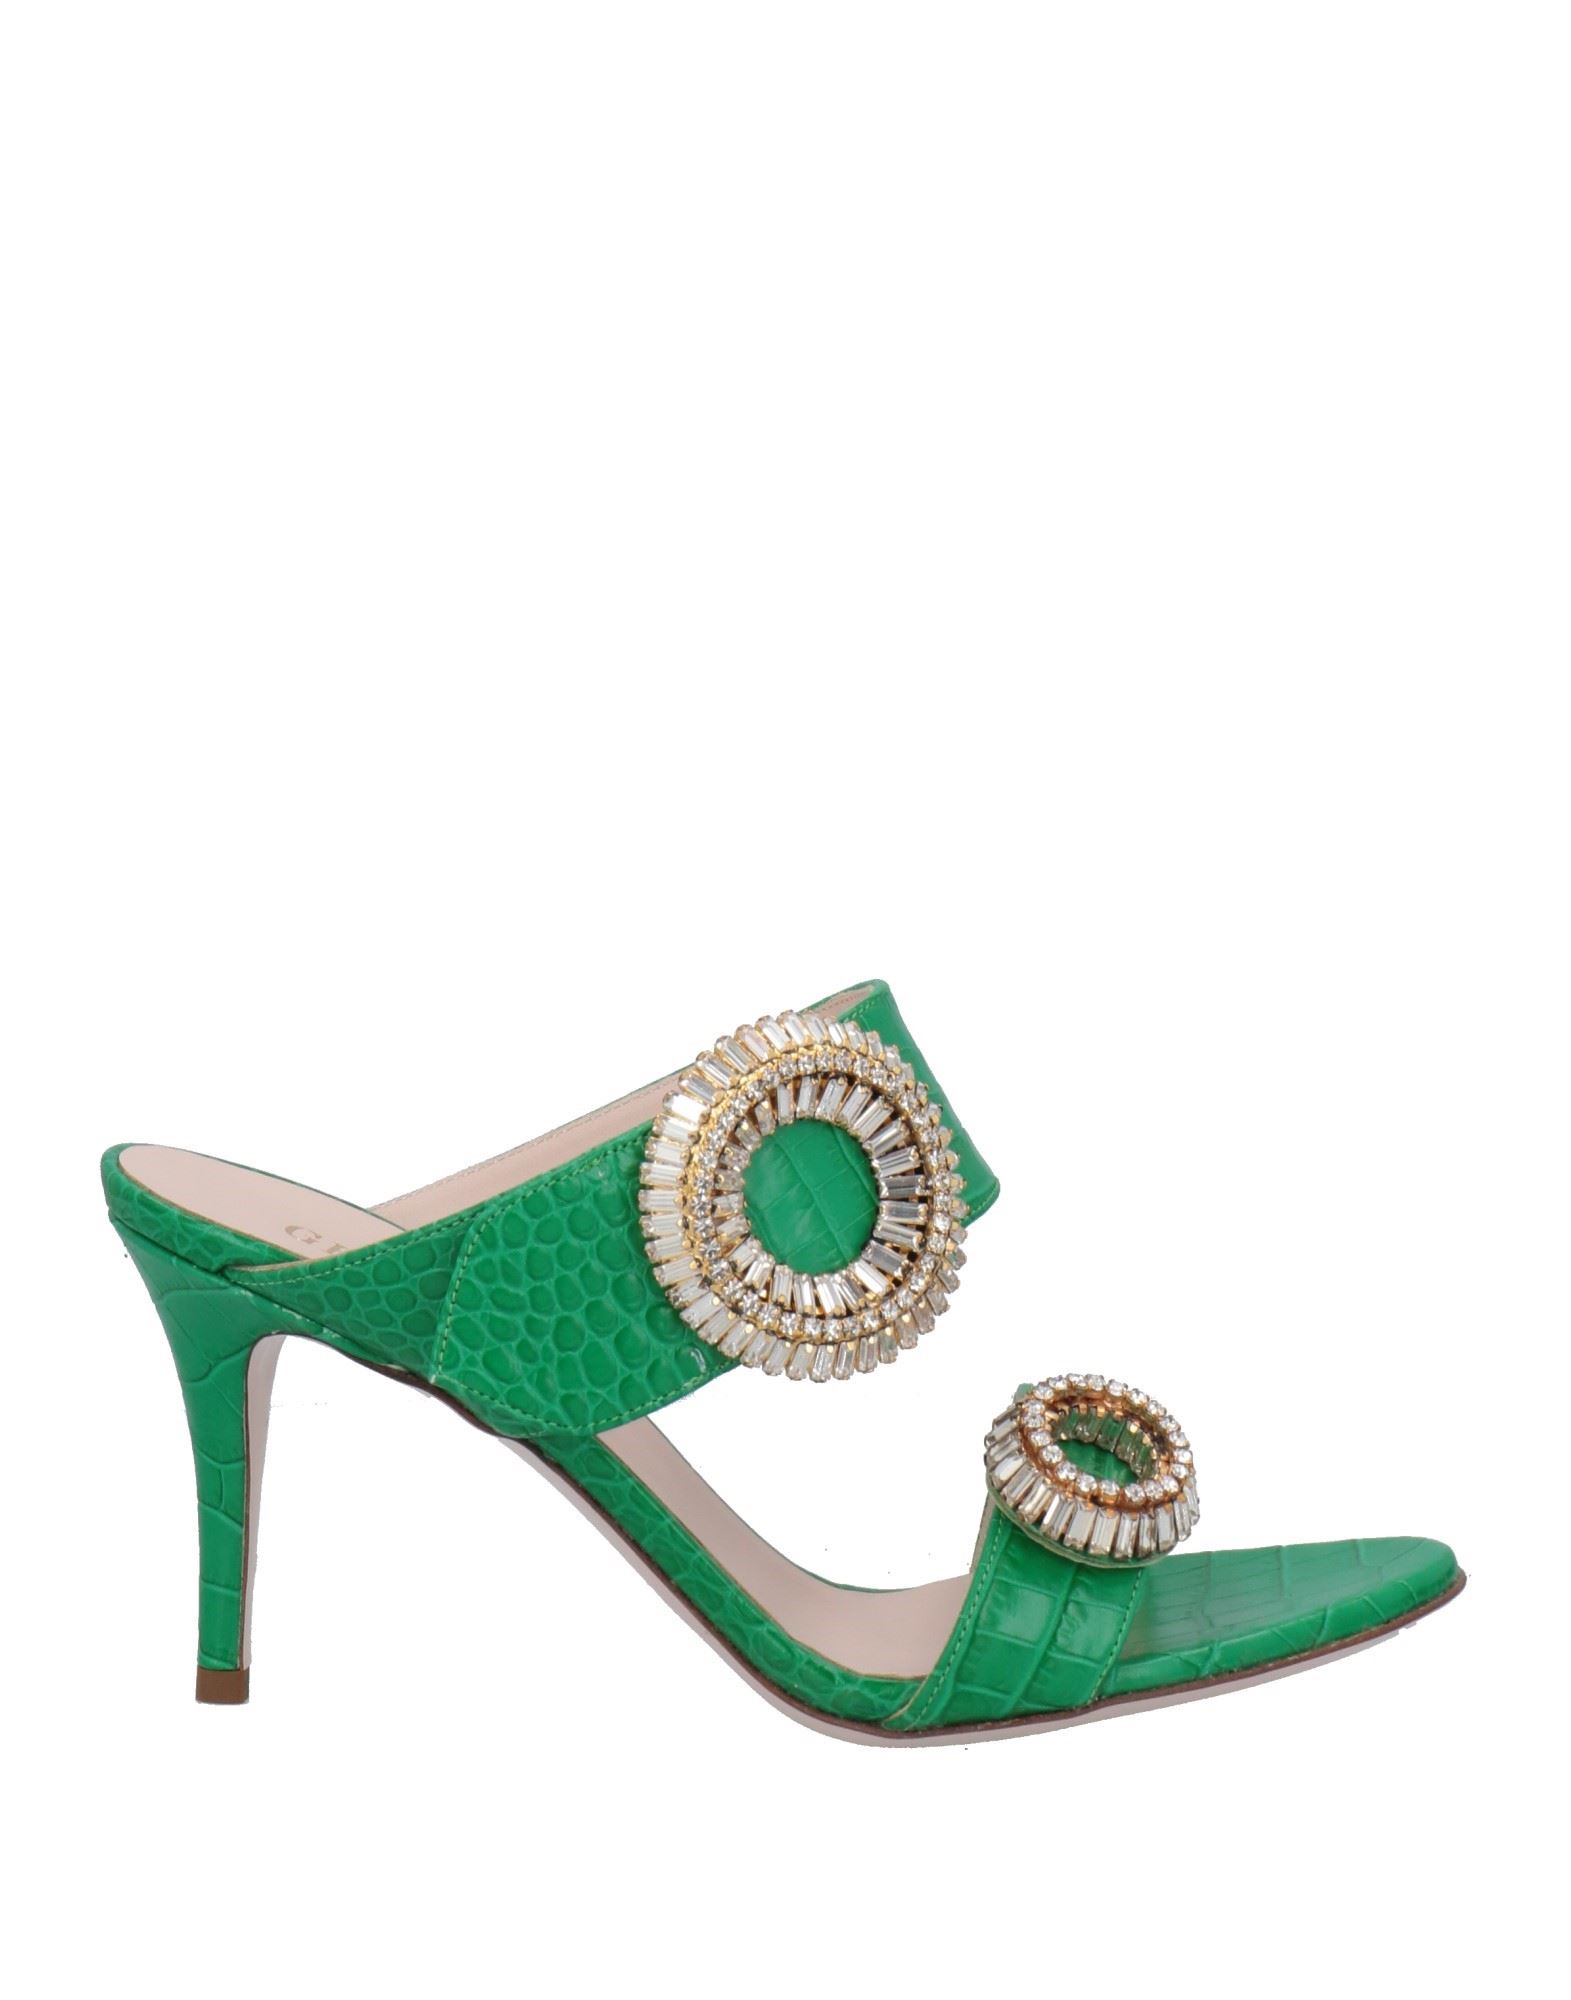 Gedebe Sandals In Emerald Green